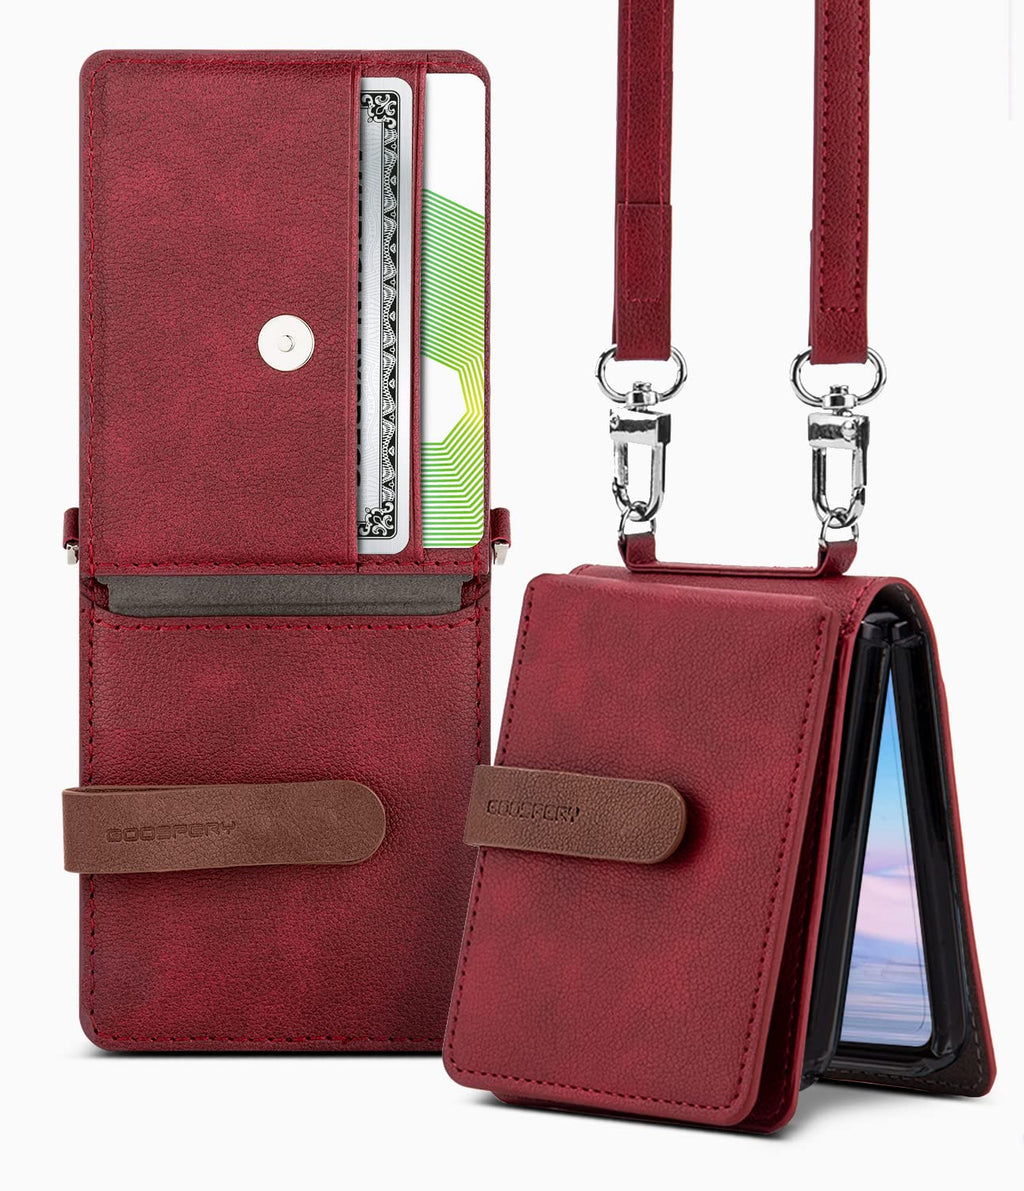  [AUSTRALIA] - Goospery Wallet Case Compatible with Galaxy Z Flip 4 Case, Detachable Card Holder 2 Card Pocket Storage Premium PU Leather Adjustable Cross-Body Strap Attached Earbud Cord Organizer, Burgandy Burgundy